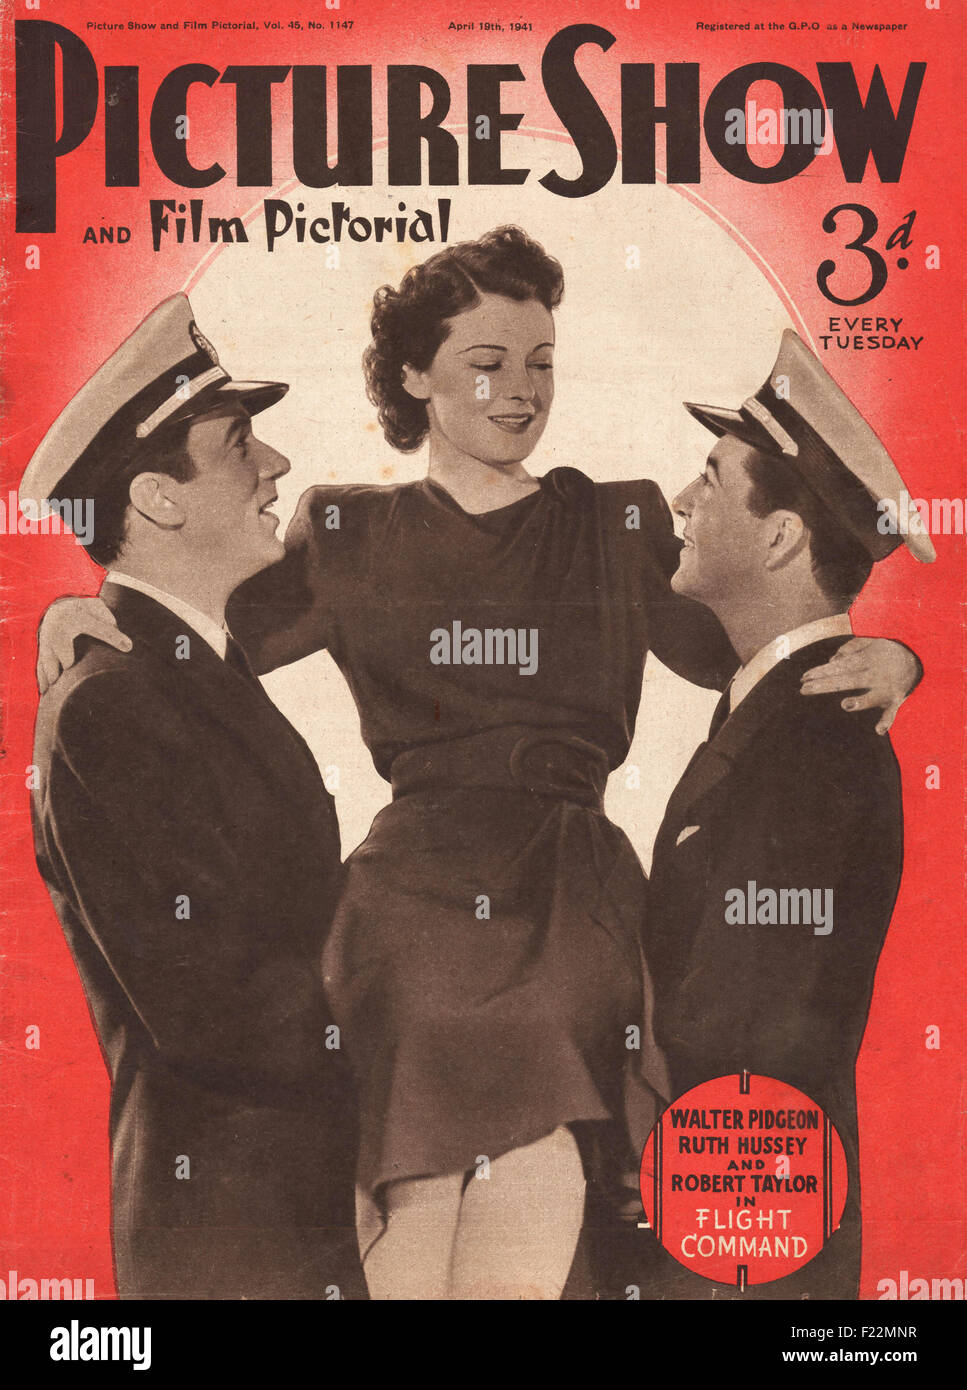 1941 Picture Show Ruth Hussey, Robert Taylor & Walter Pidgeon Stock Photo